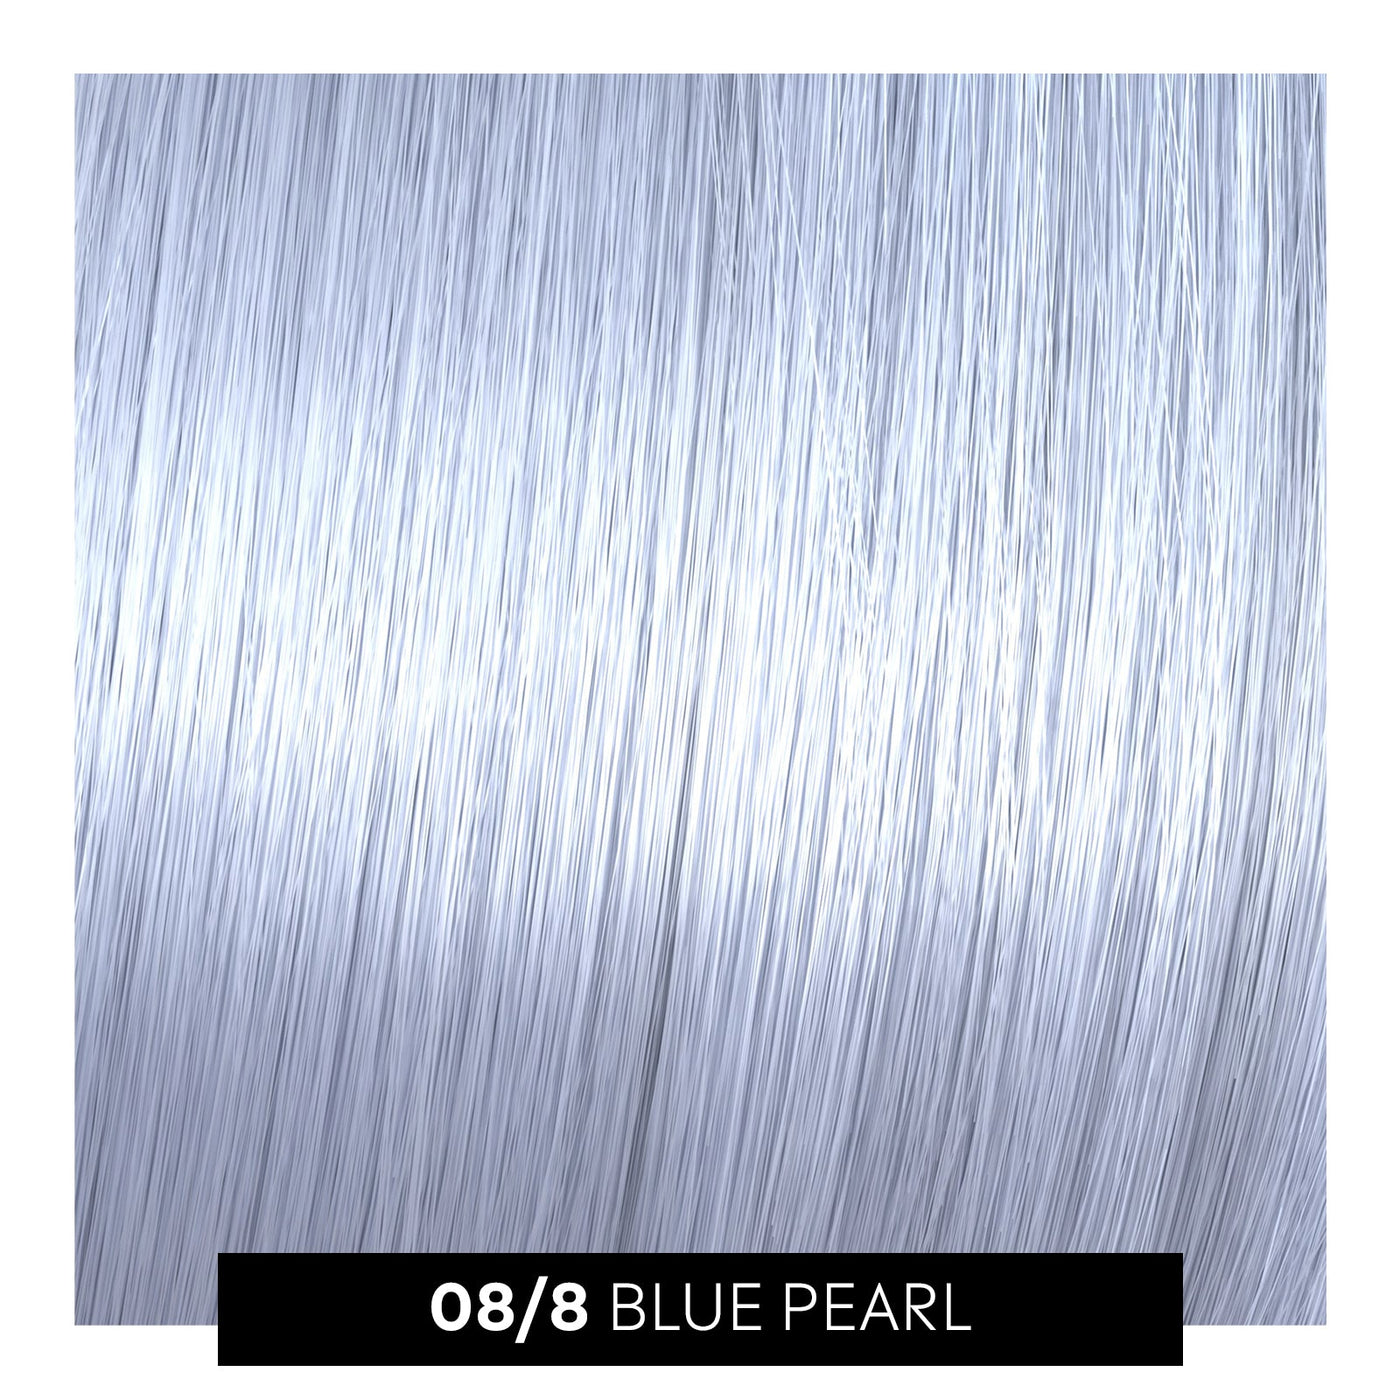 08/8 blue pearl